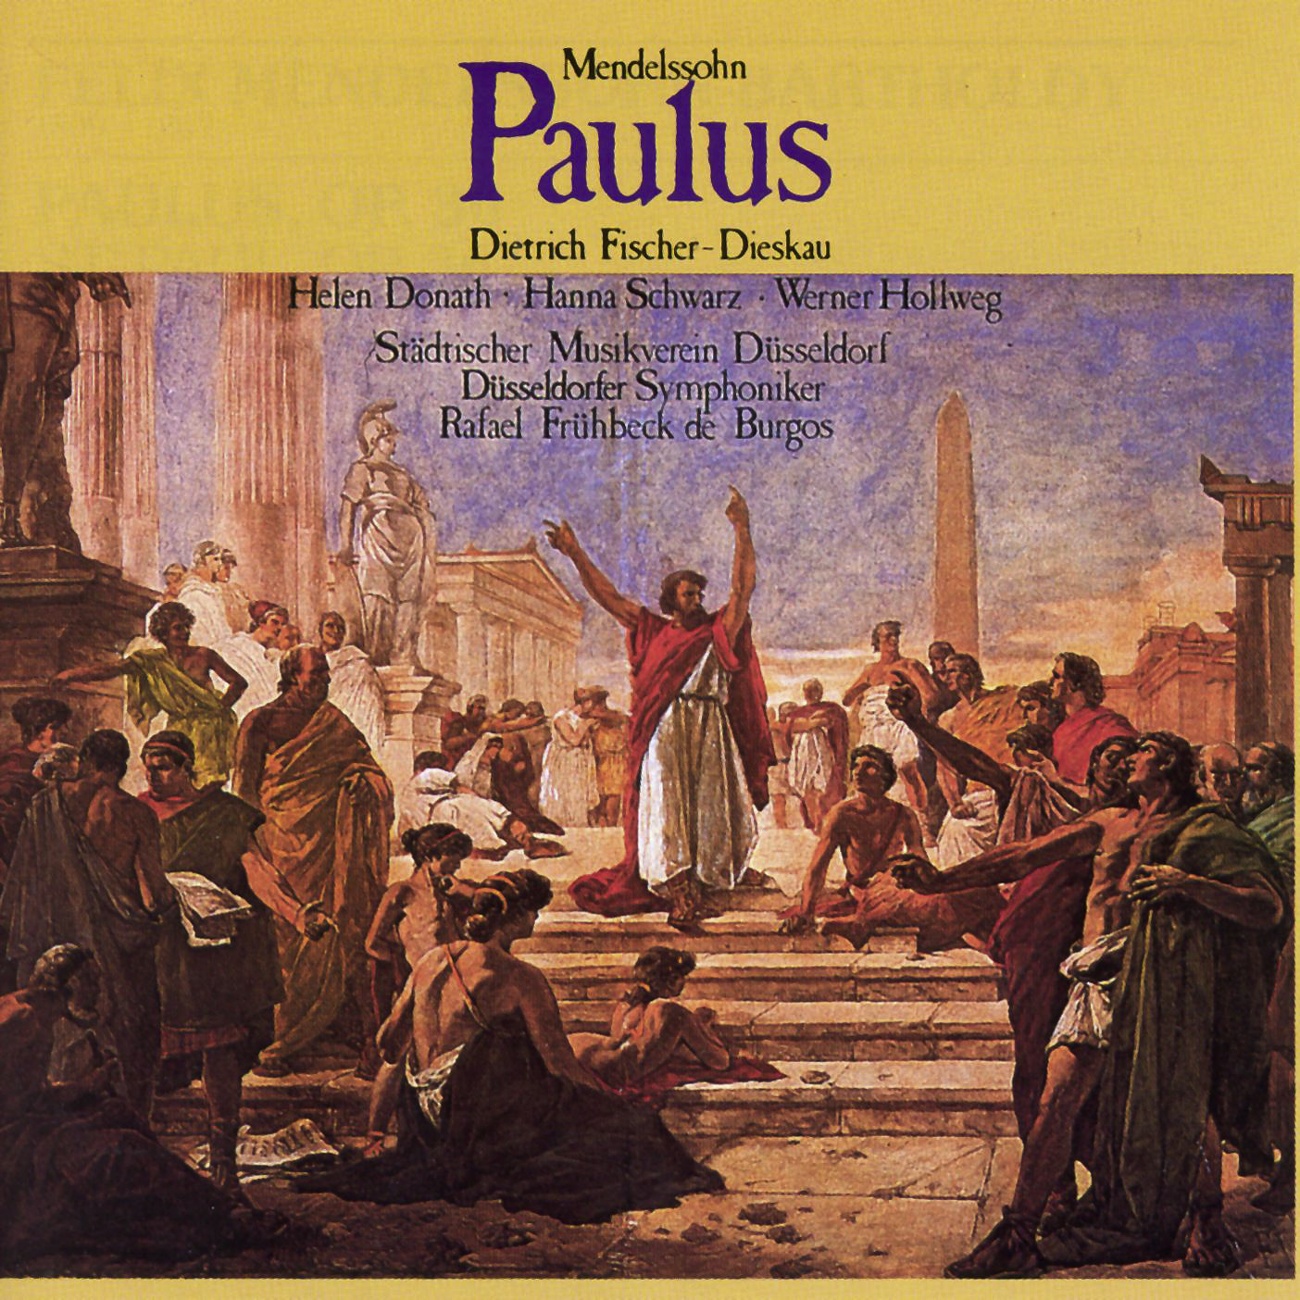 Paulus op. 36  Oratorium in 2 Teilen 1987 Digital Remaster, Erster Teil: Nr. 1  Ouvertü re Orchester